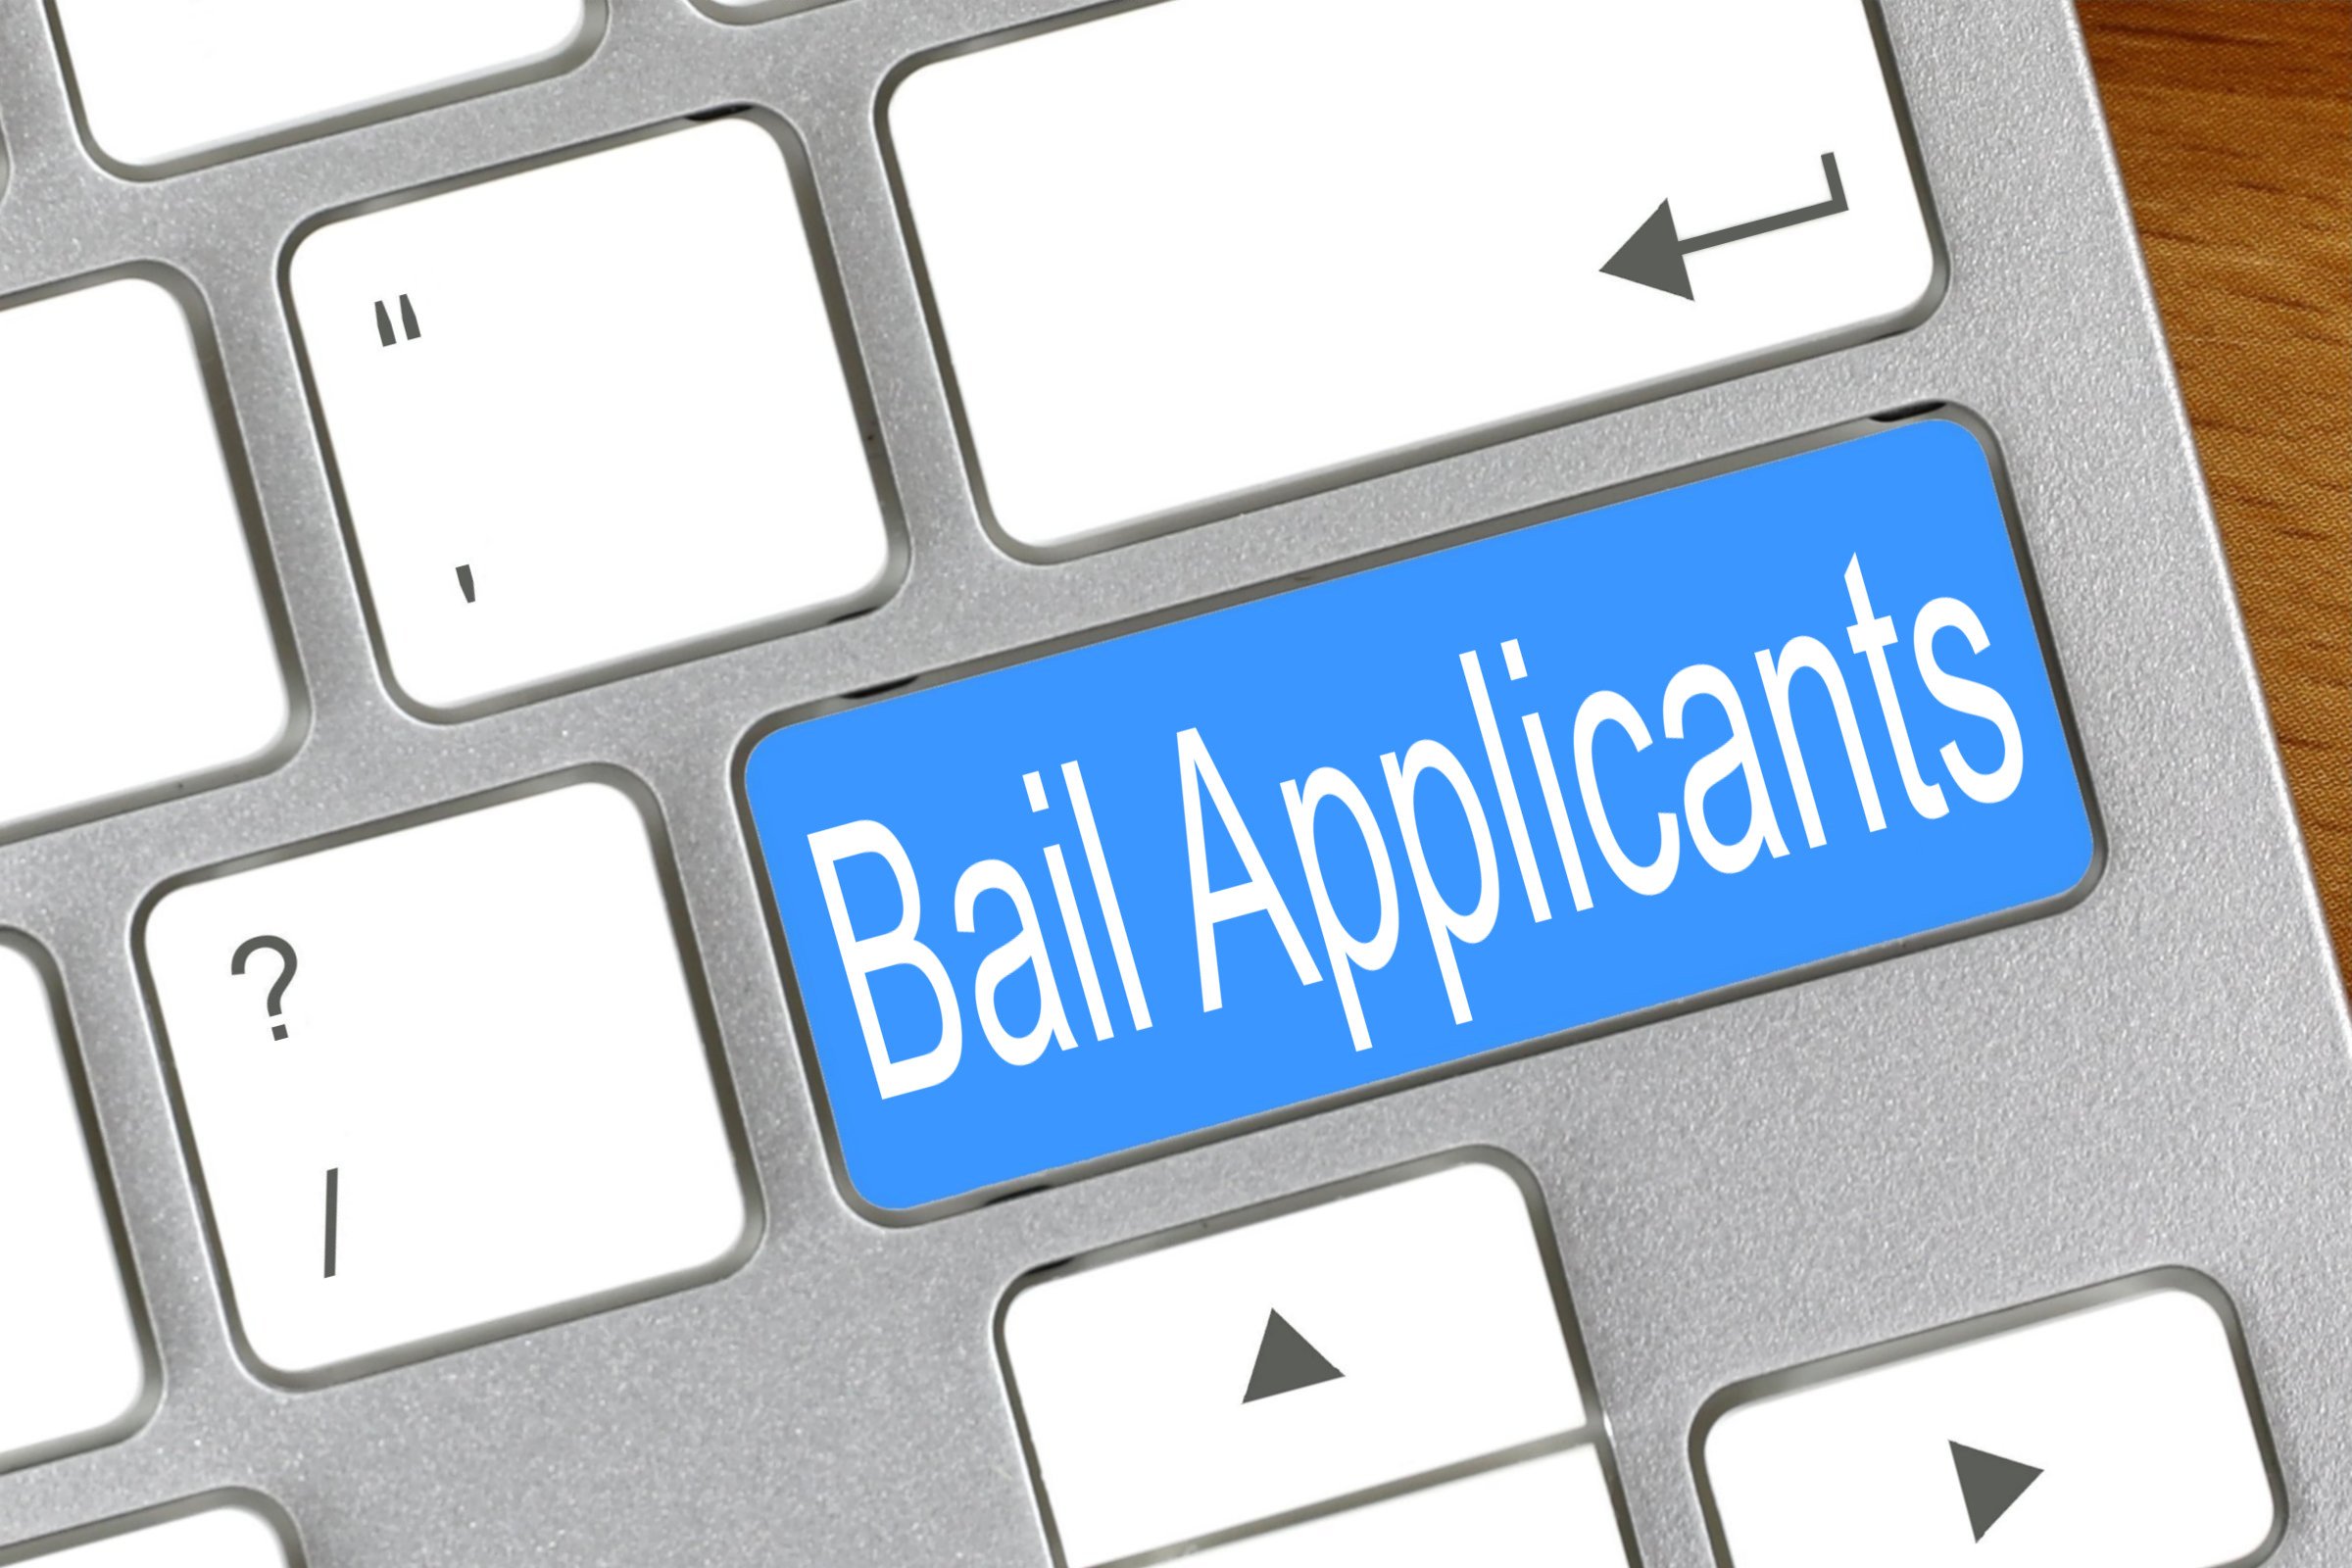 bail applicants